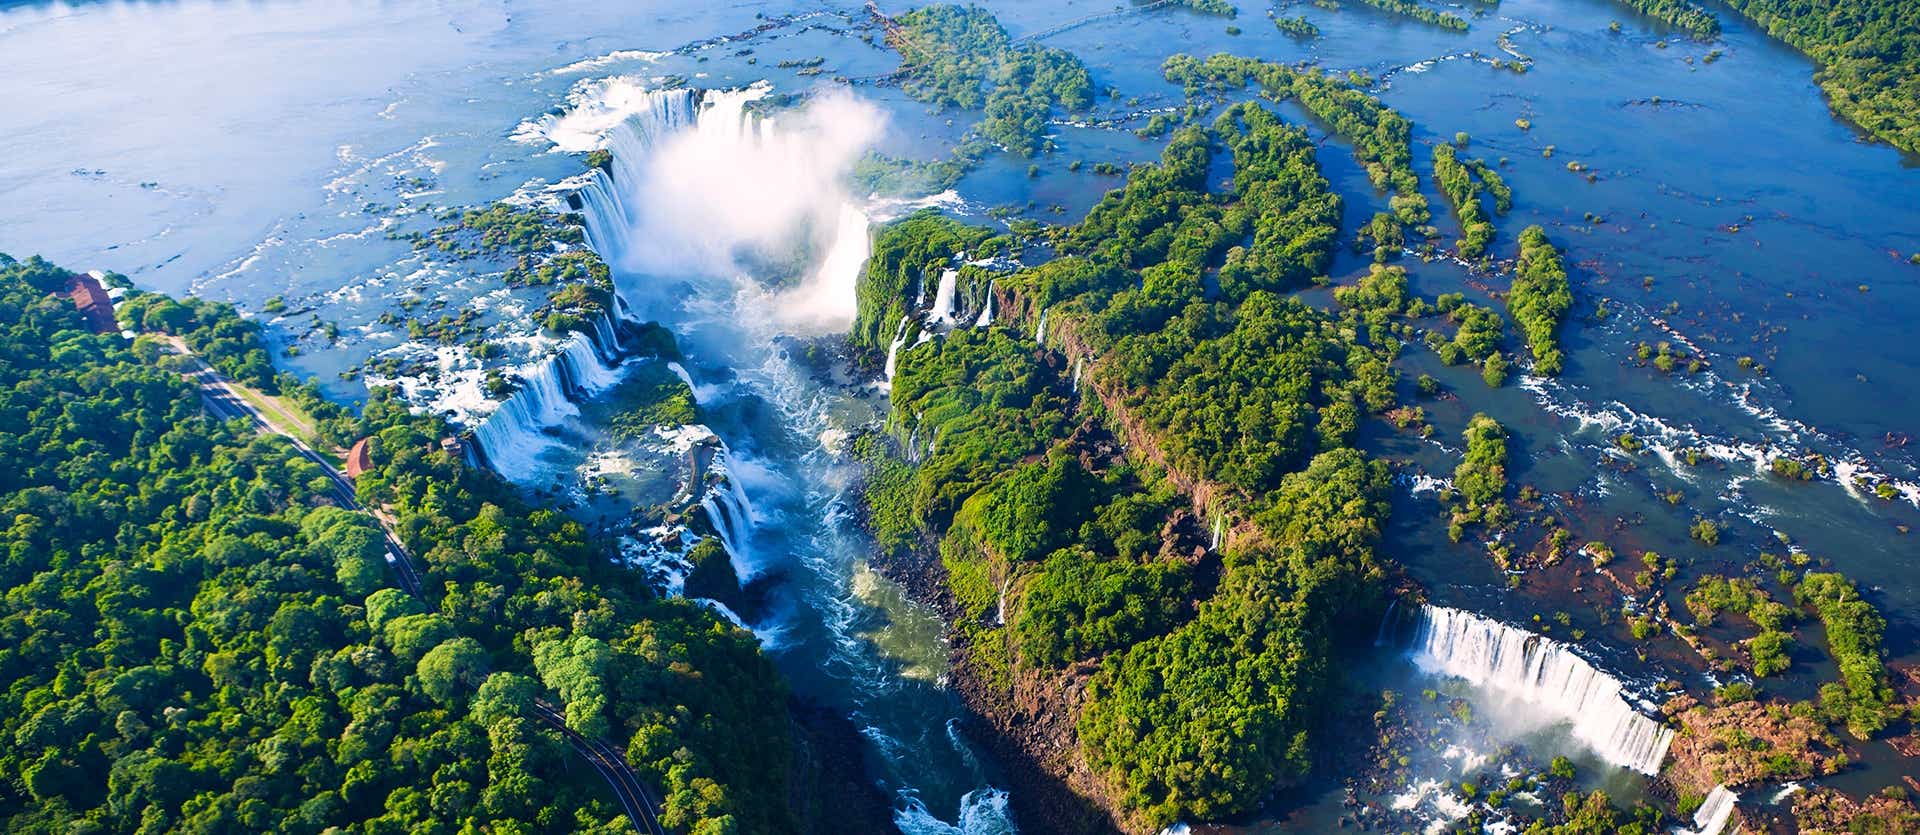 Iguazu Falls <span class="iconos separador"></span> Argentina & Brazil